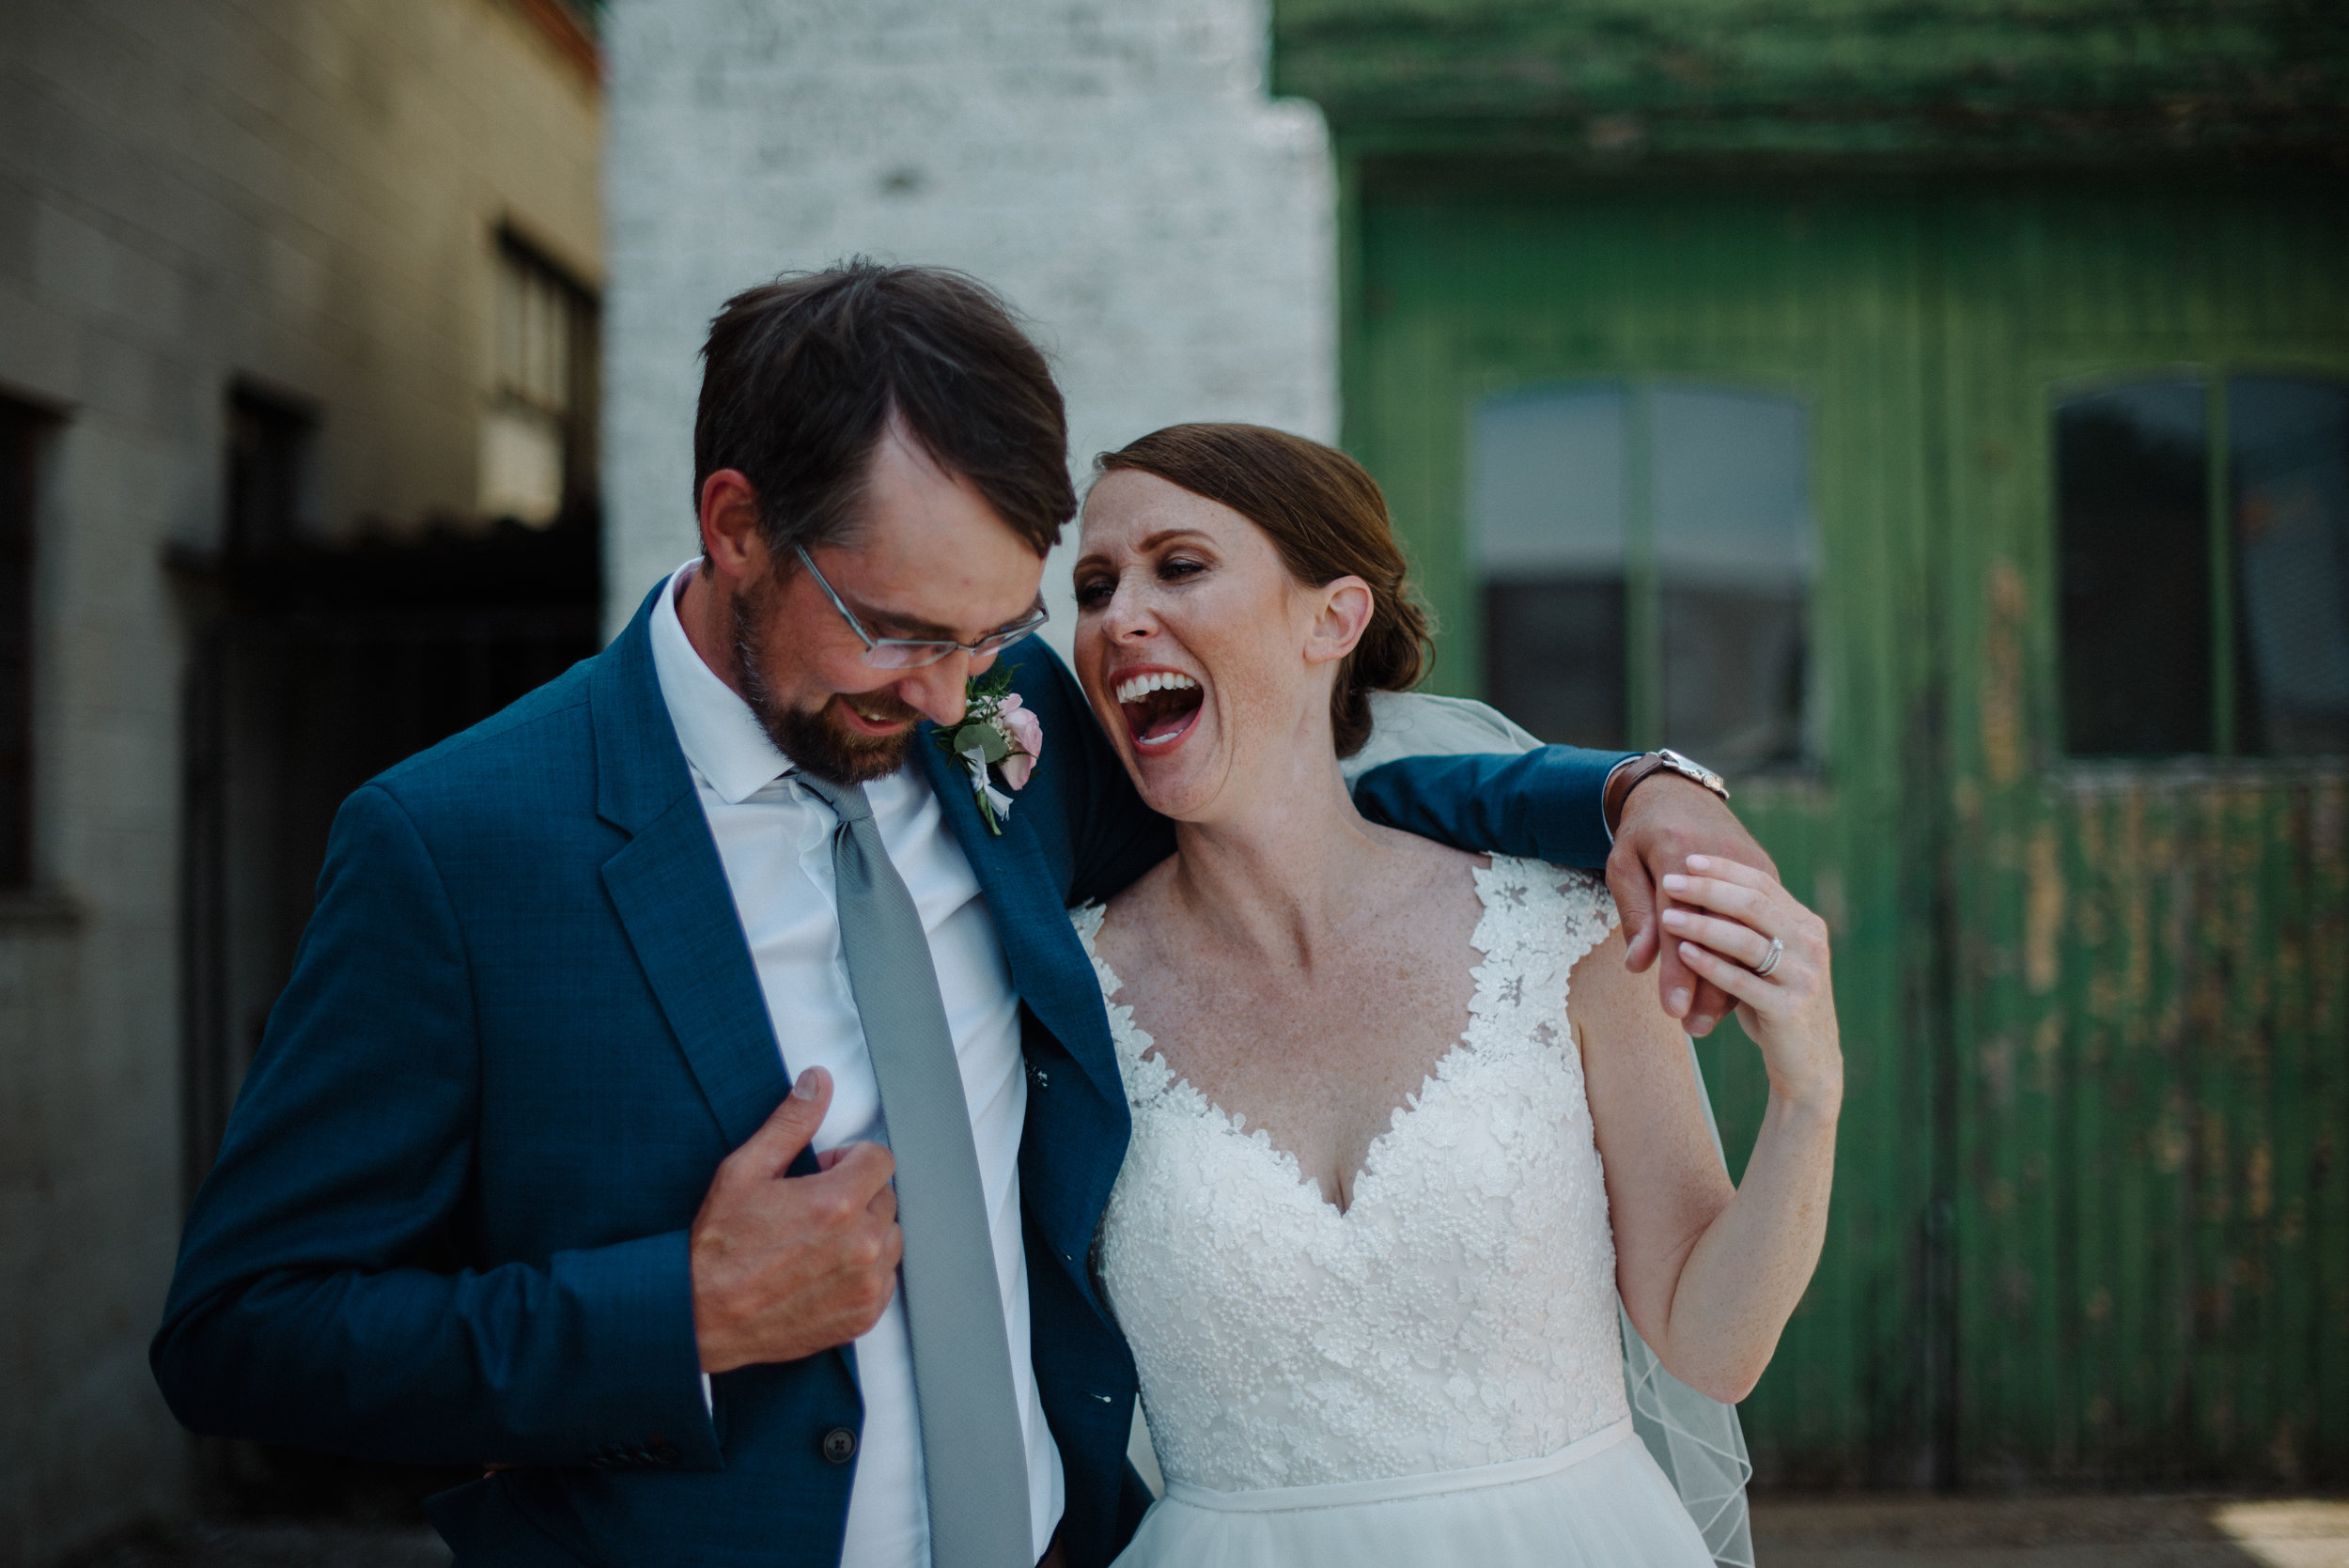 laughing bride wedding photography.jpg